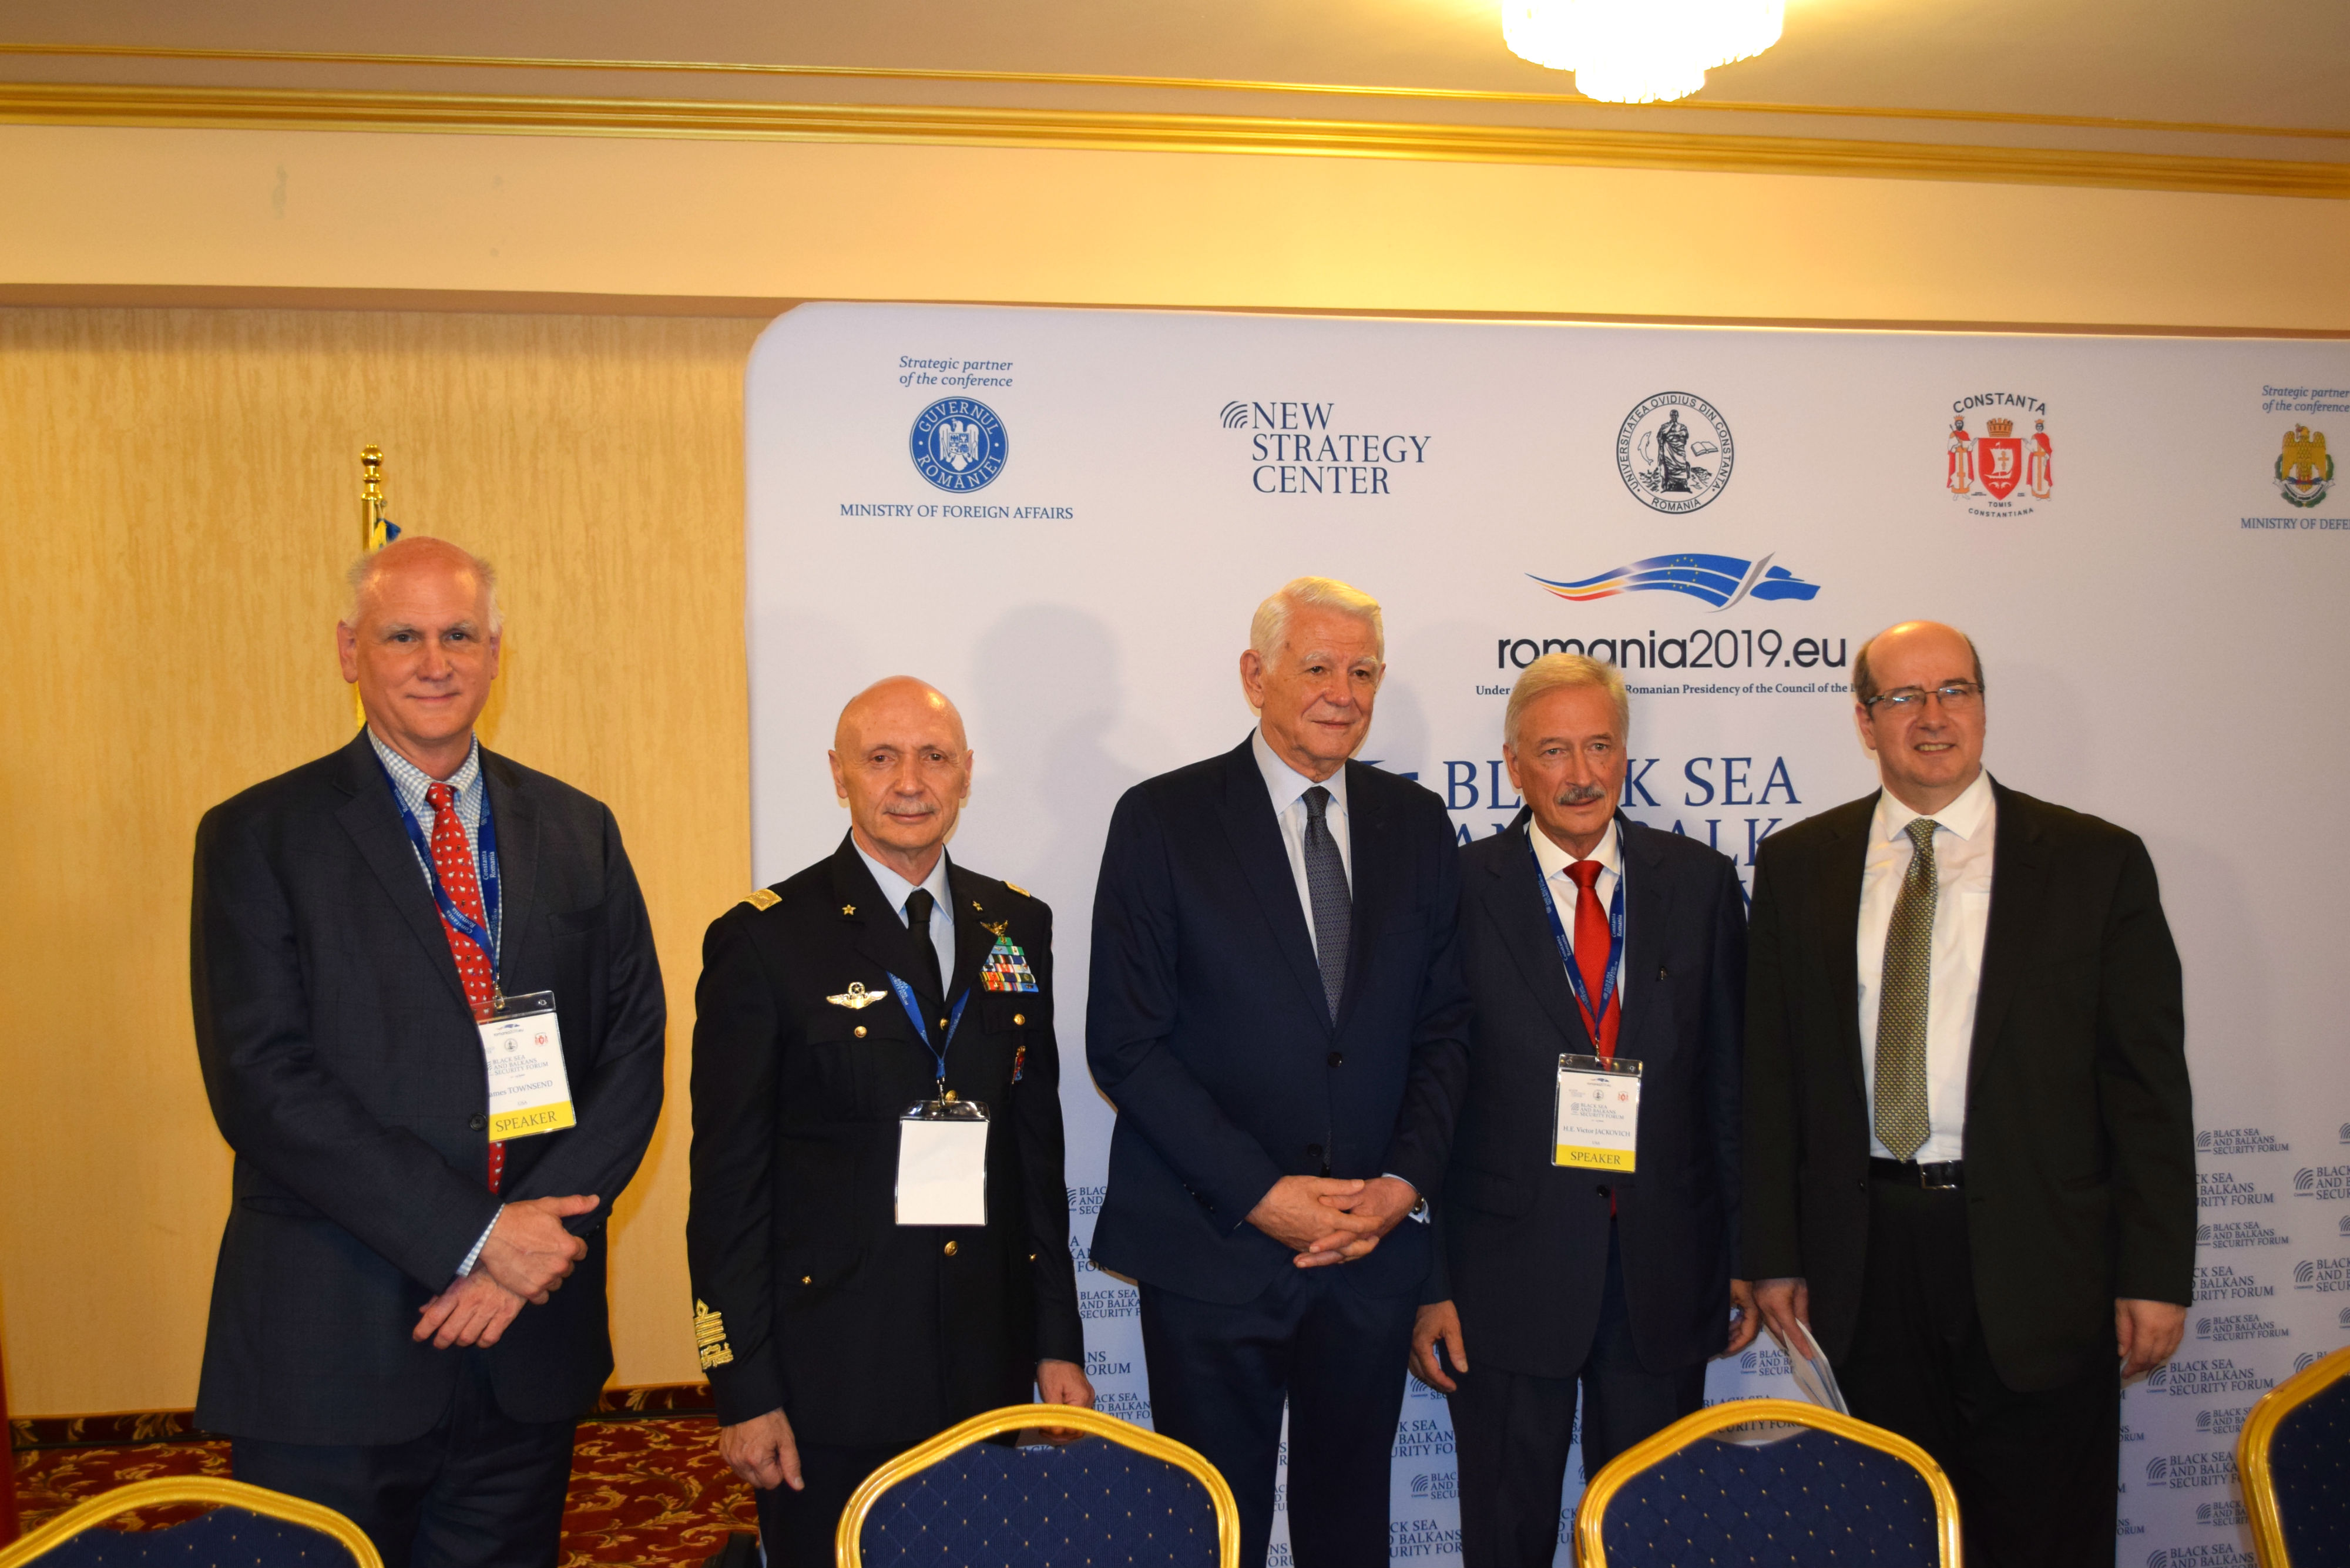 Black Sea and Balkans Security Forum 2019 – ziua 2